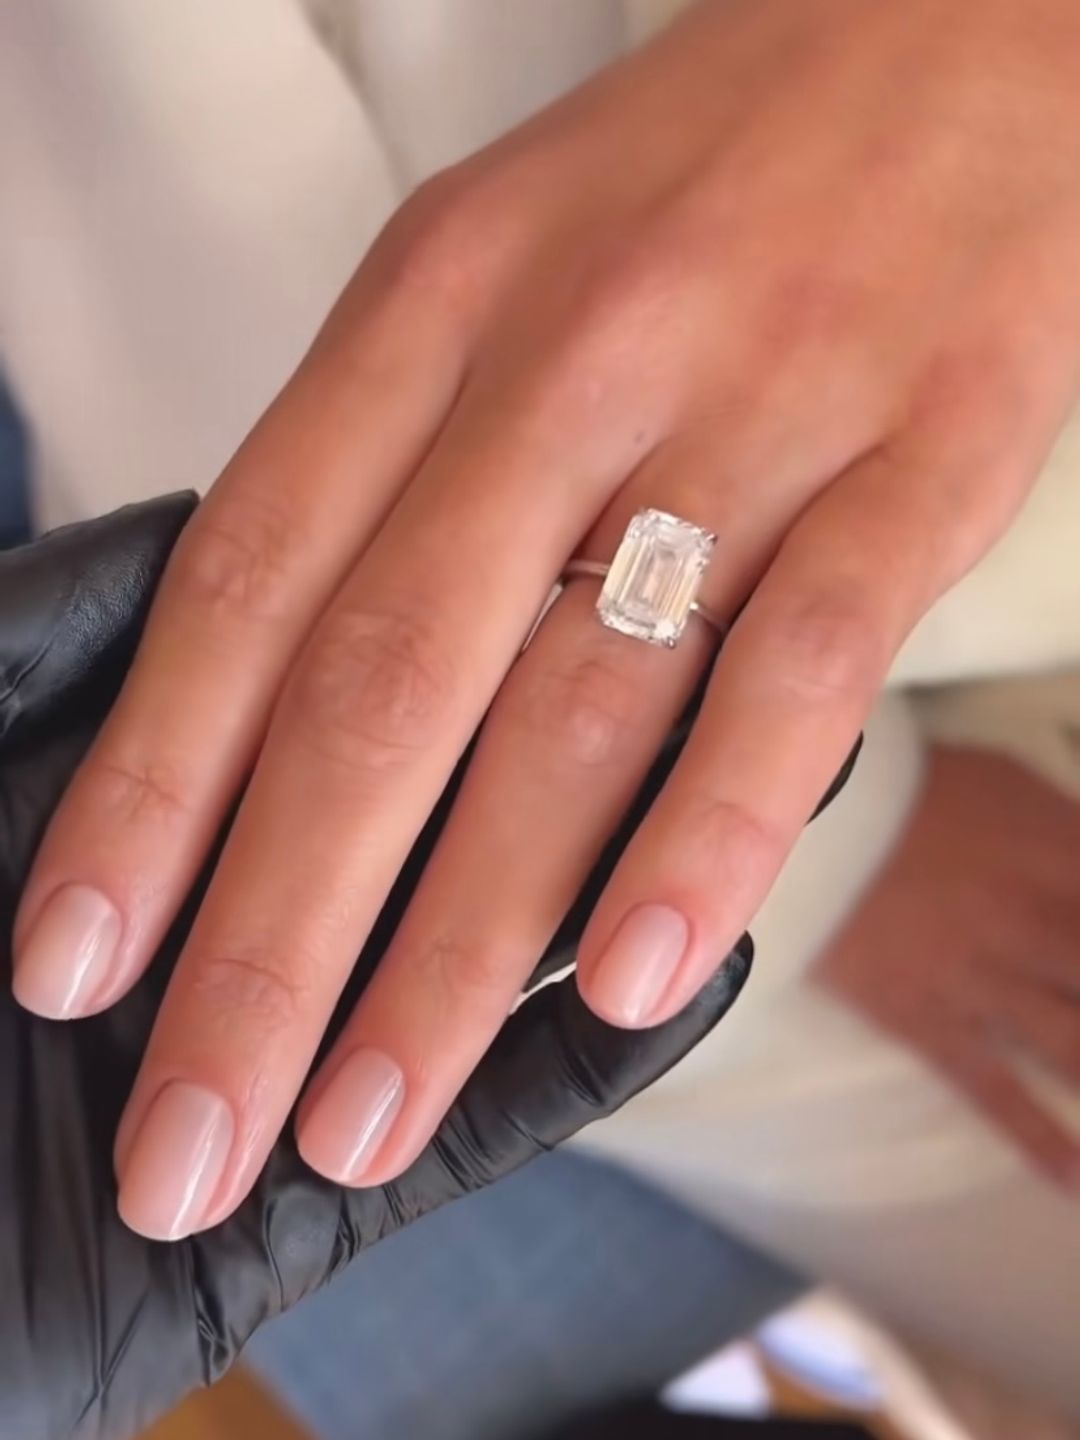 Sofia Richie's wedding nails 